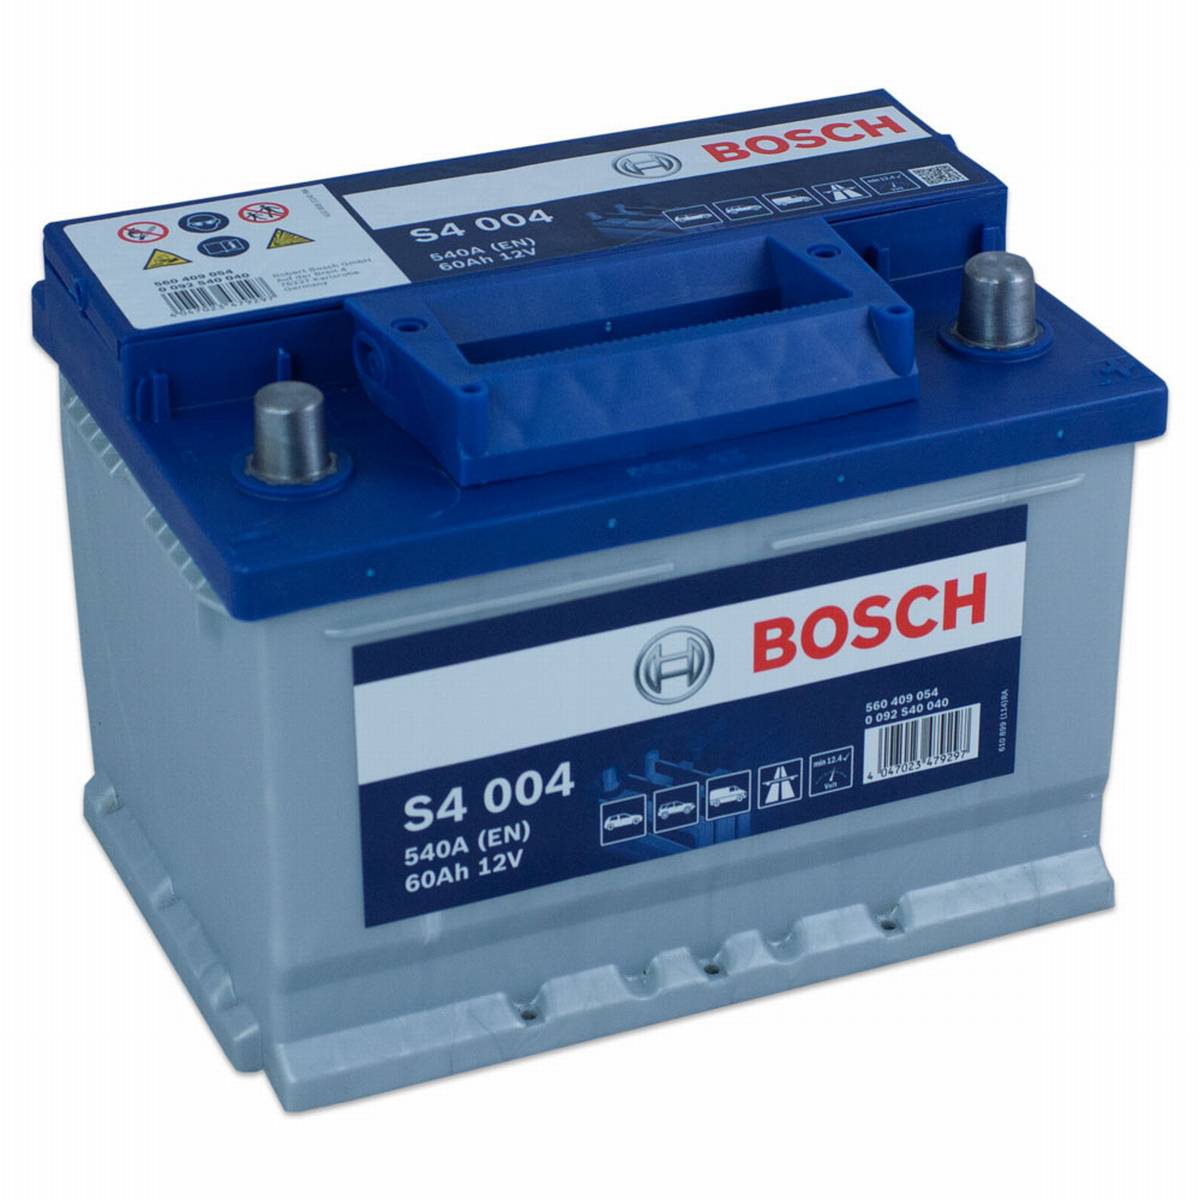 Bosch S4 004 Autobatterie 12V 60Ah 540A, Starterbatterie, Boot, Batterien für